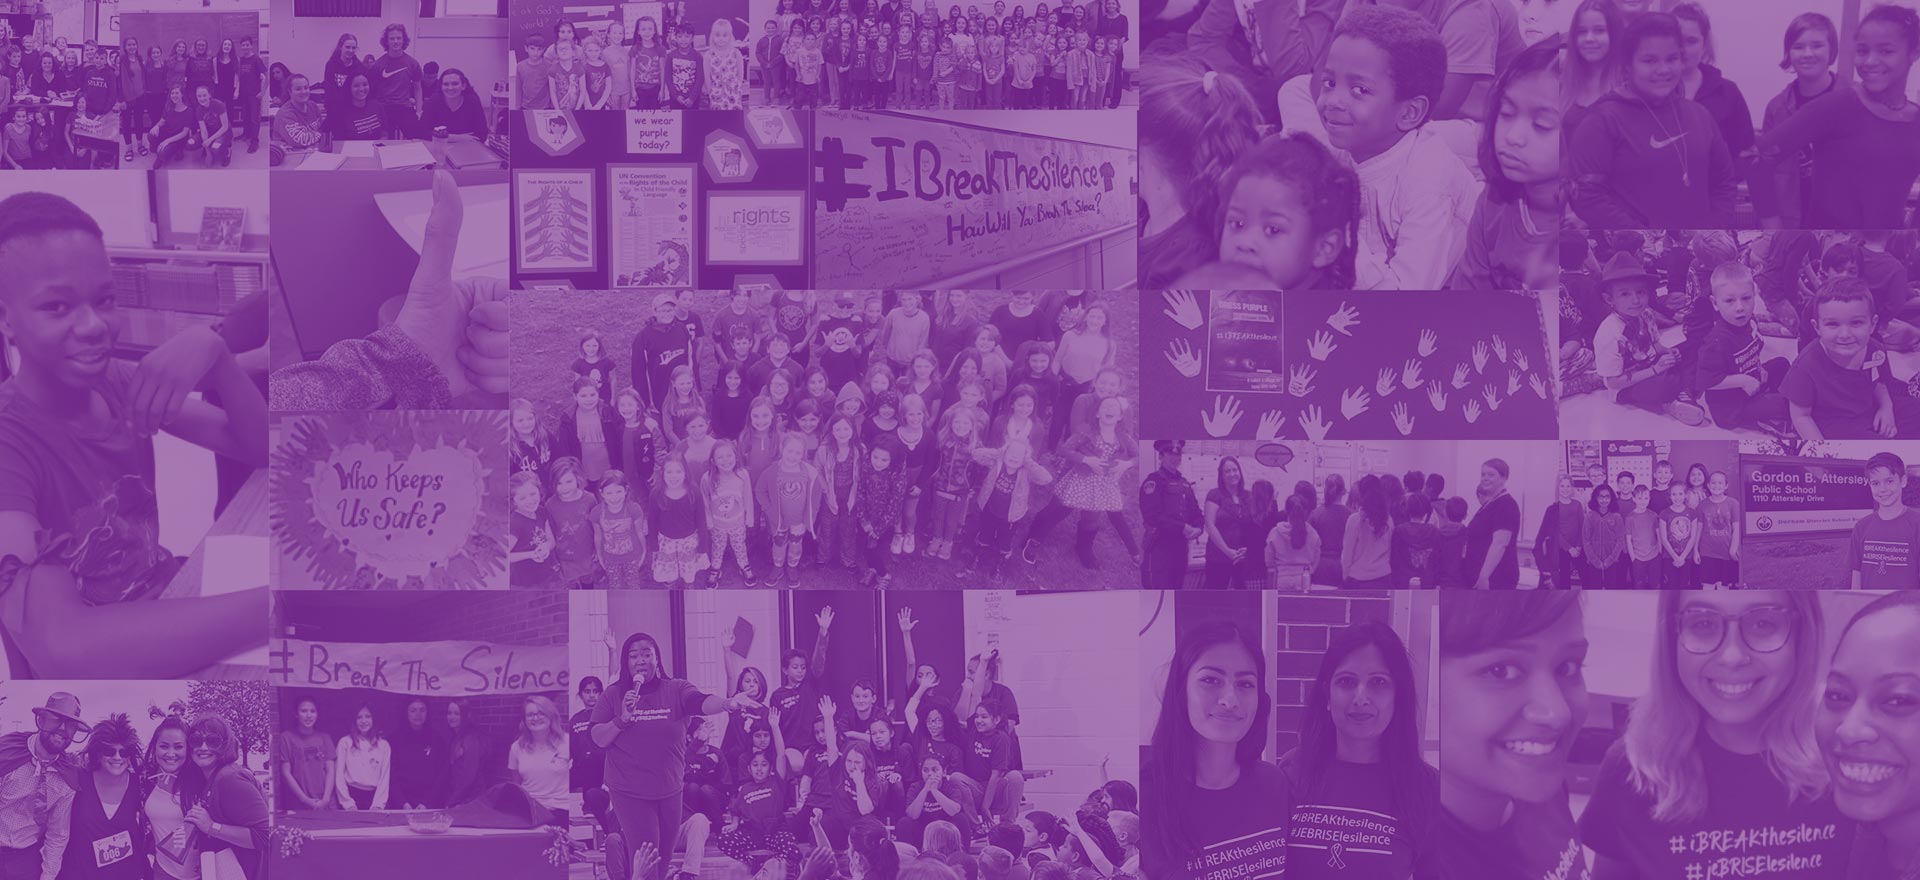 Dress Purple Day 2019 photo collage